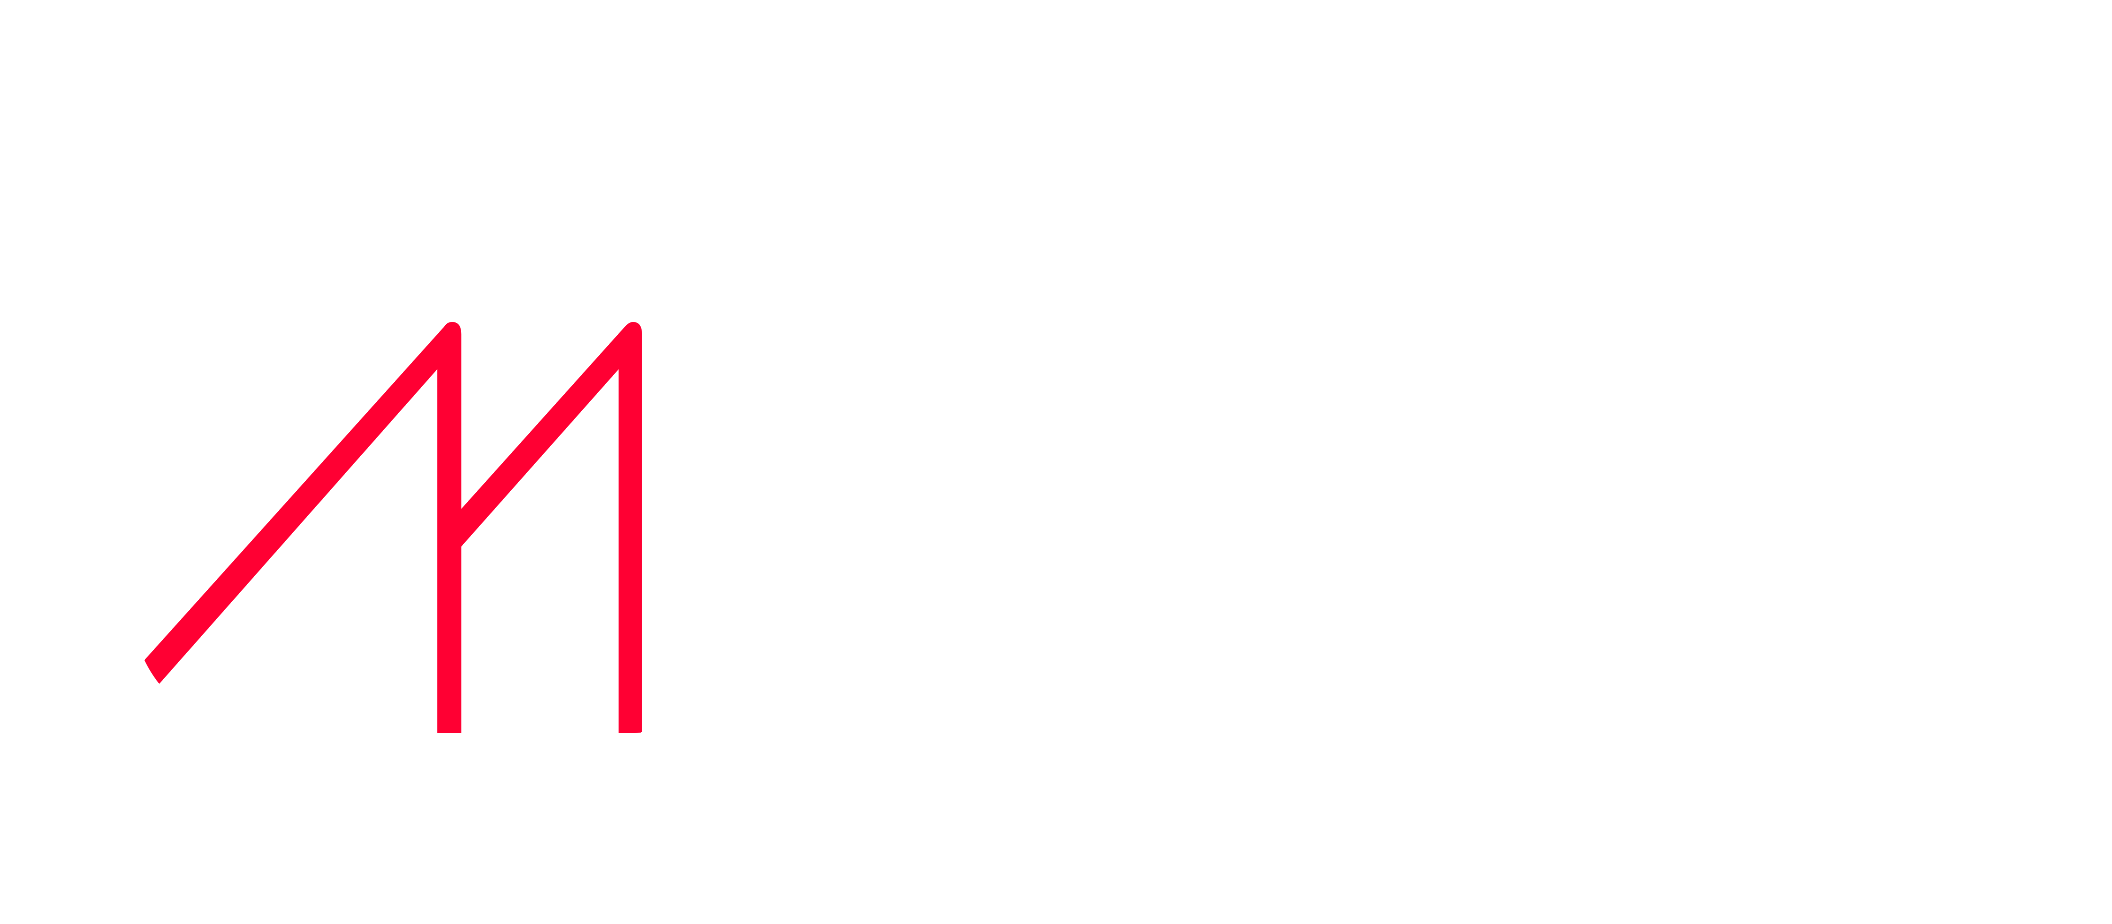 MASAR AL-MUSTAQBAL COMPANY